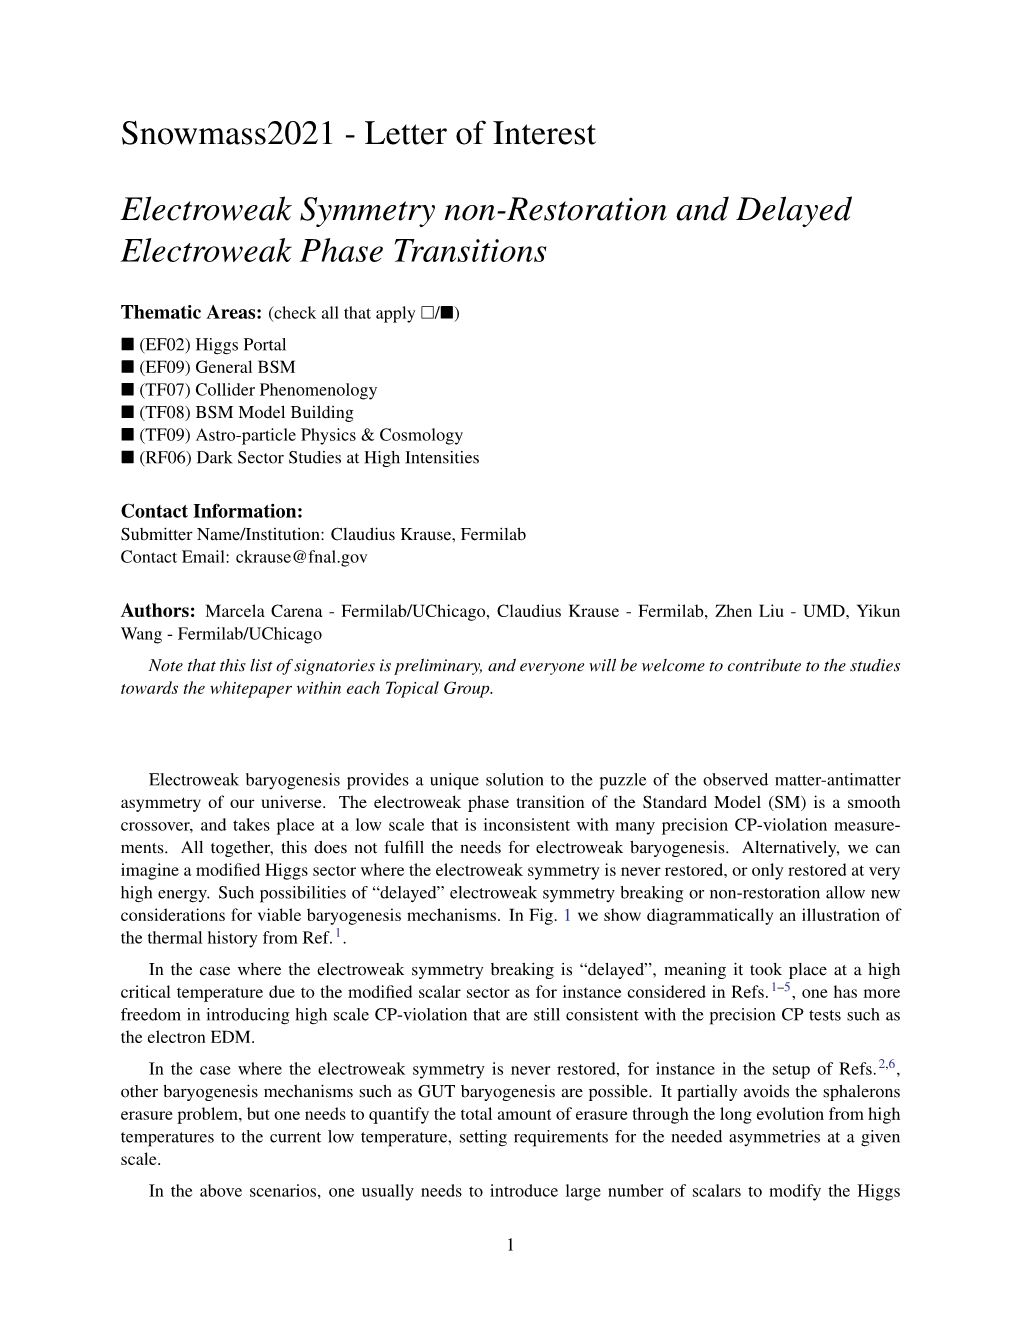 Letter of Interest Electroweak Symmetry Non-Restoration And